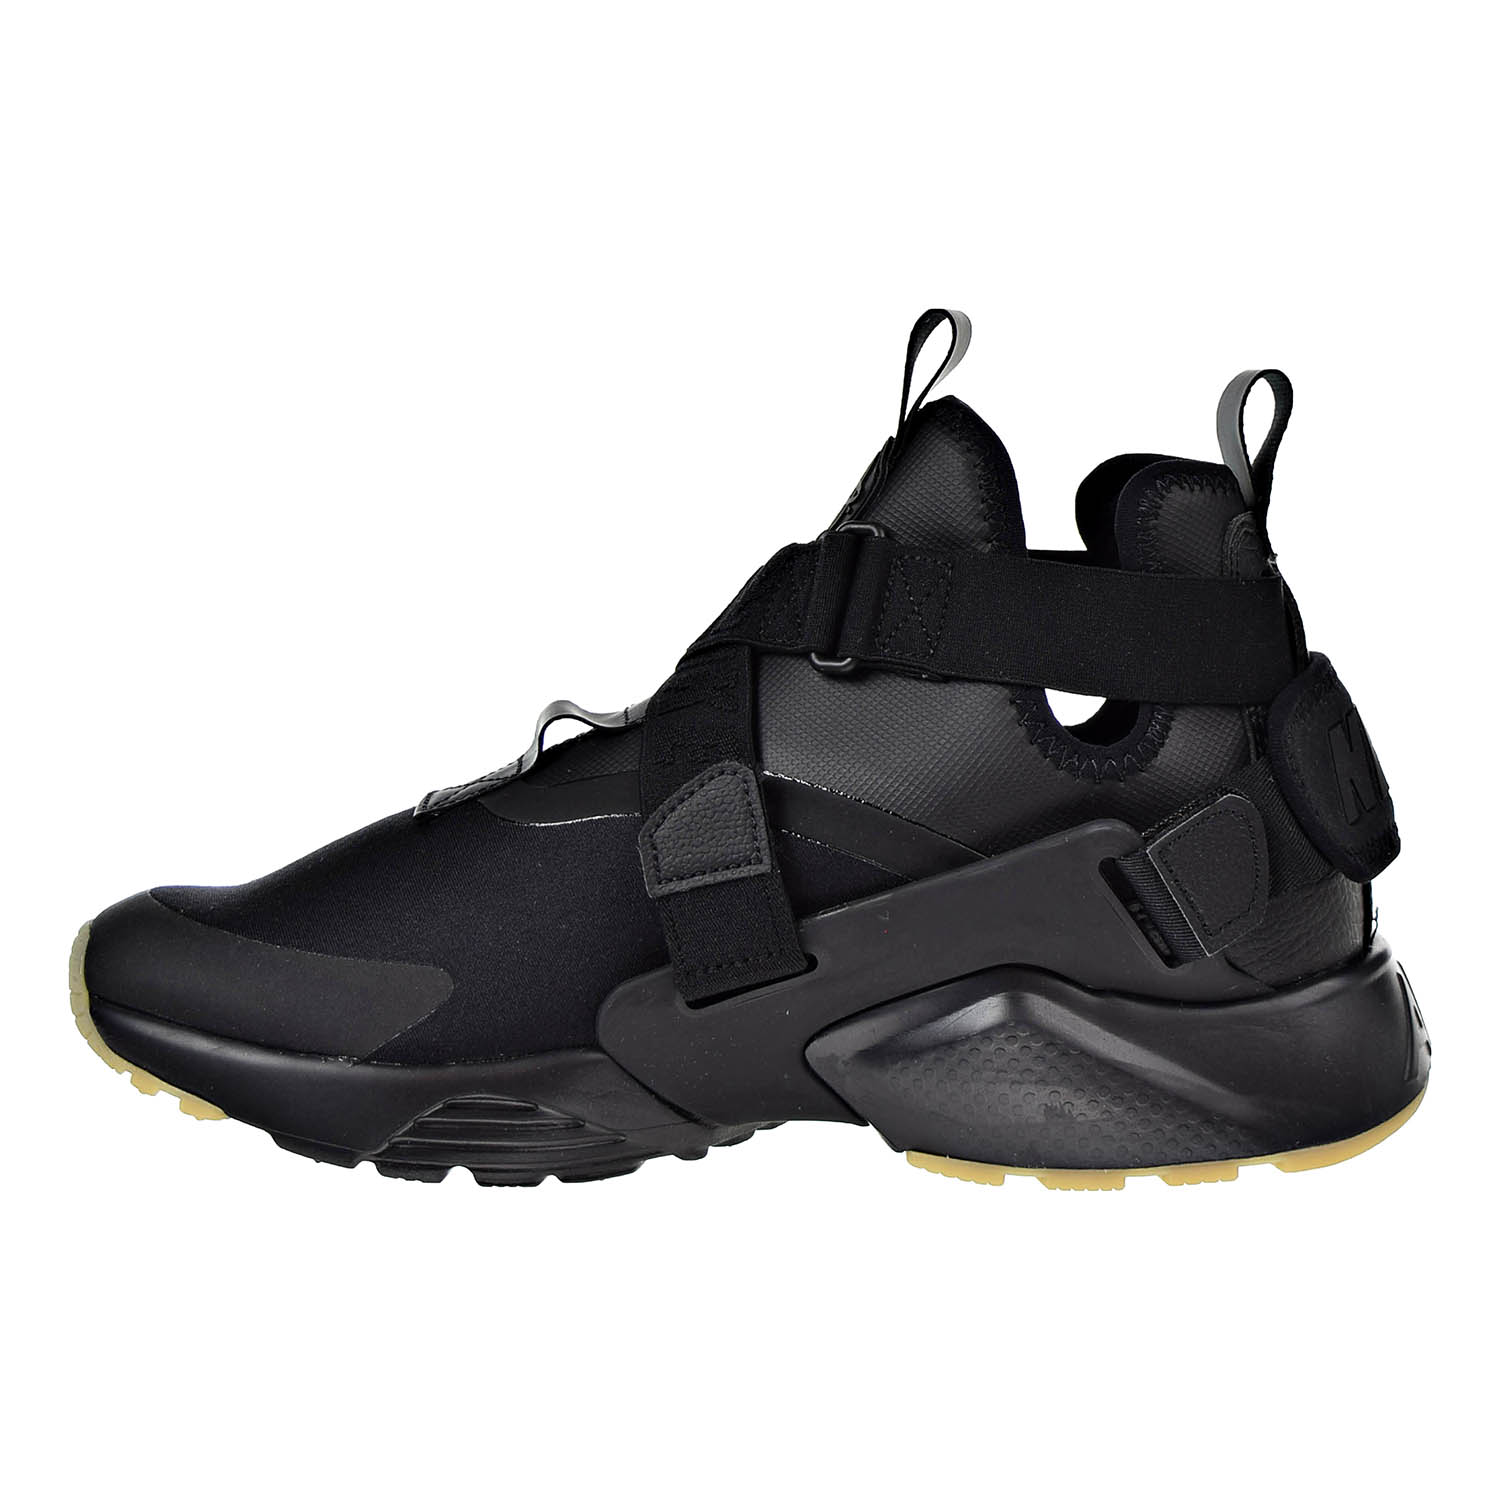 Nike Huarache Casual Shoe Black/Dark Grey ah6787-003 (12 US)